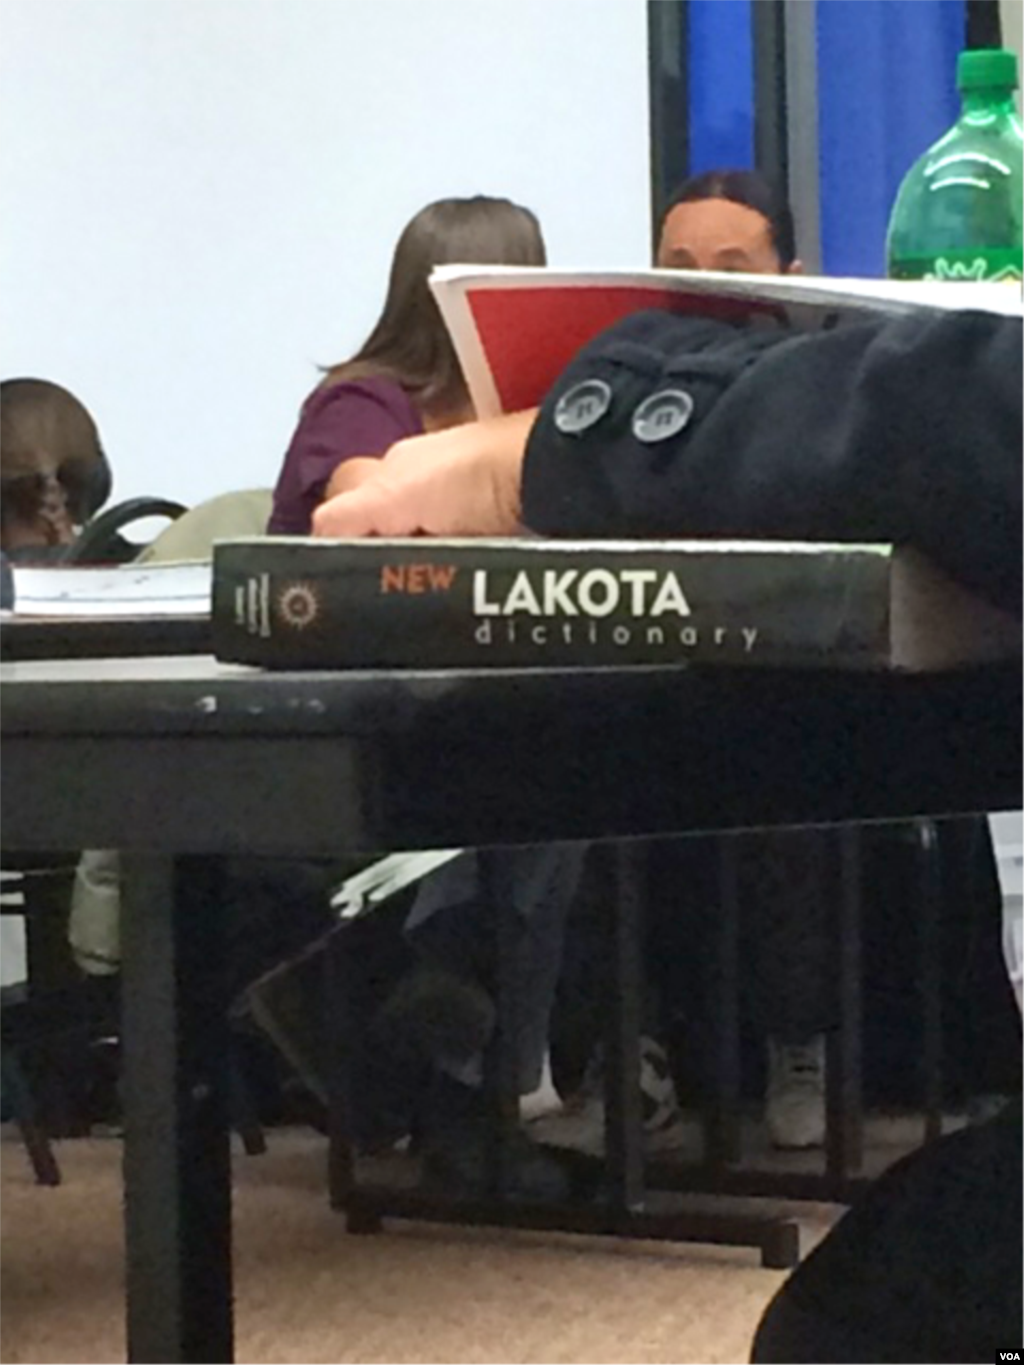 Lakota class at Sitting Bull College, Fort Yates, North Dakota, Dec. 1, 2014. (Aru Pande/VOA)